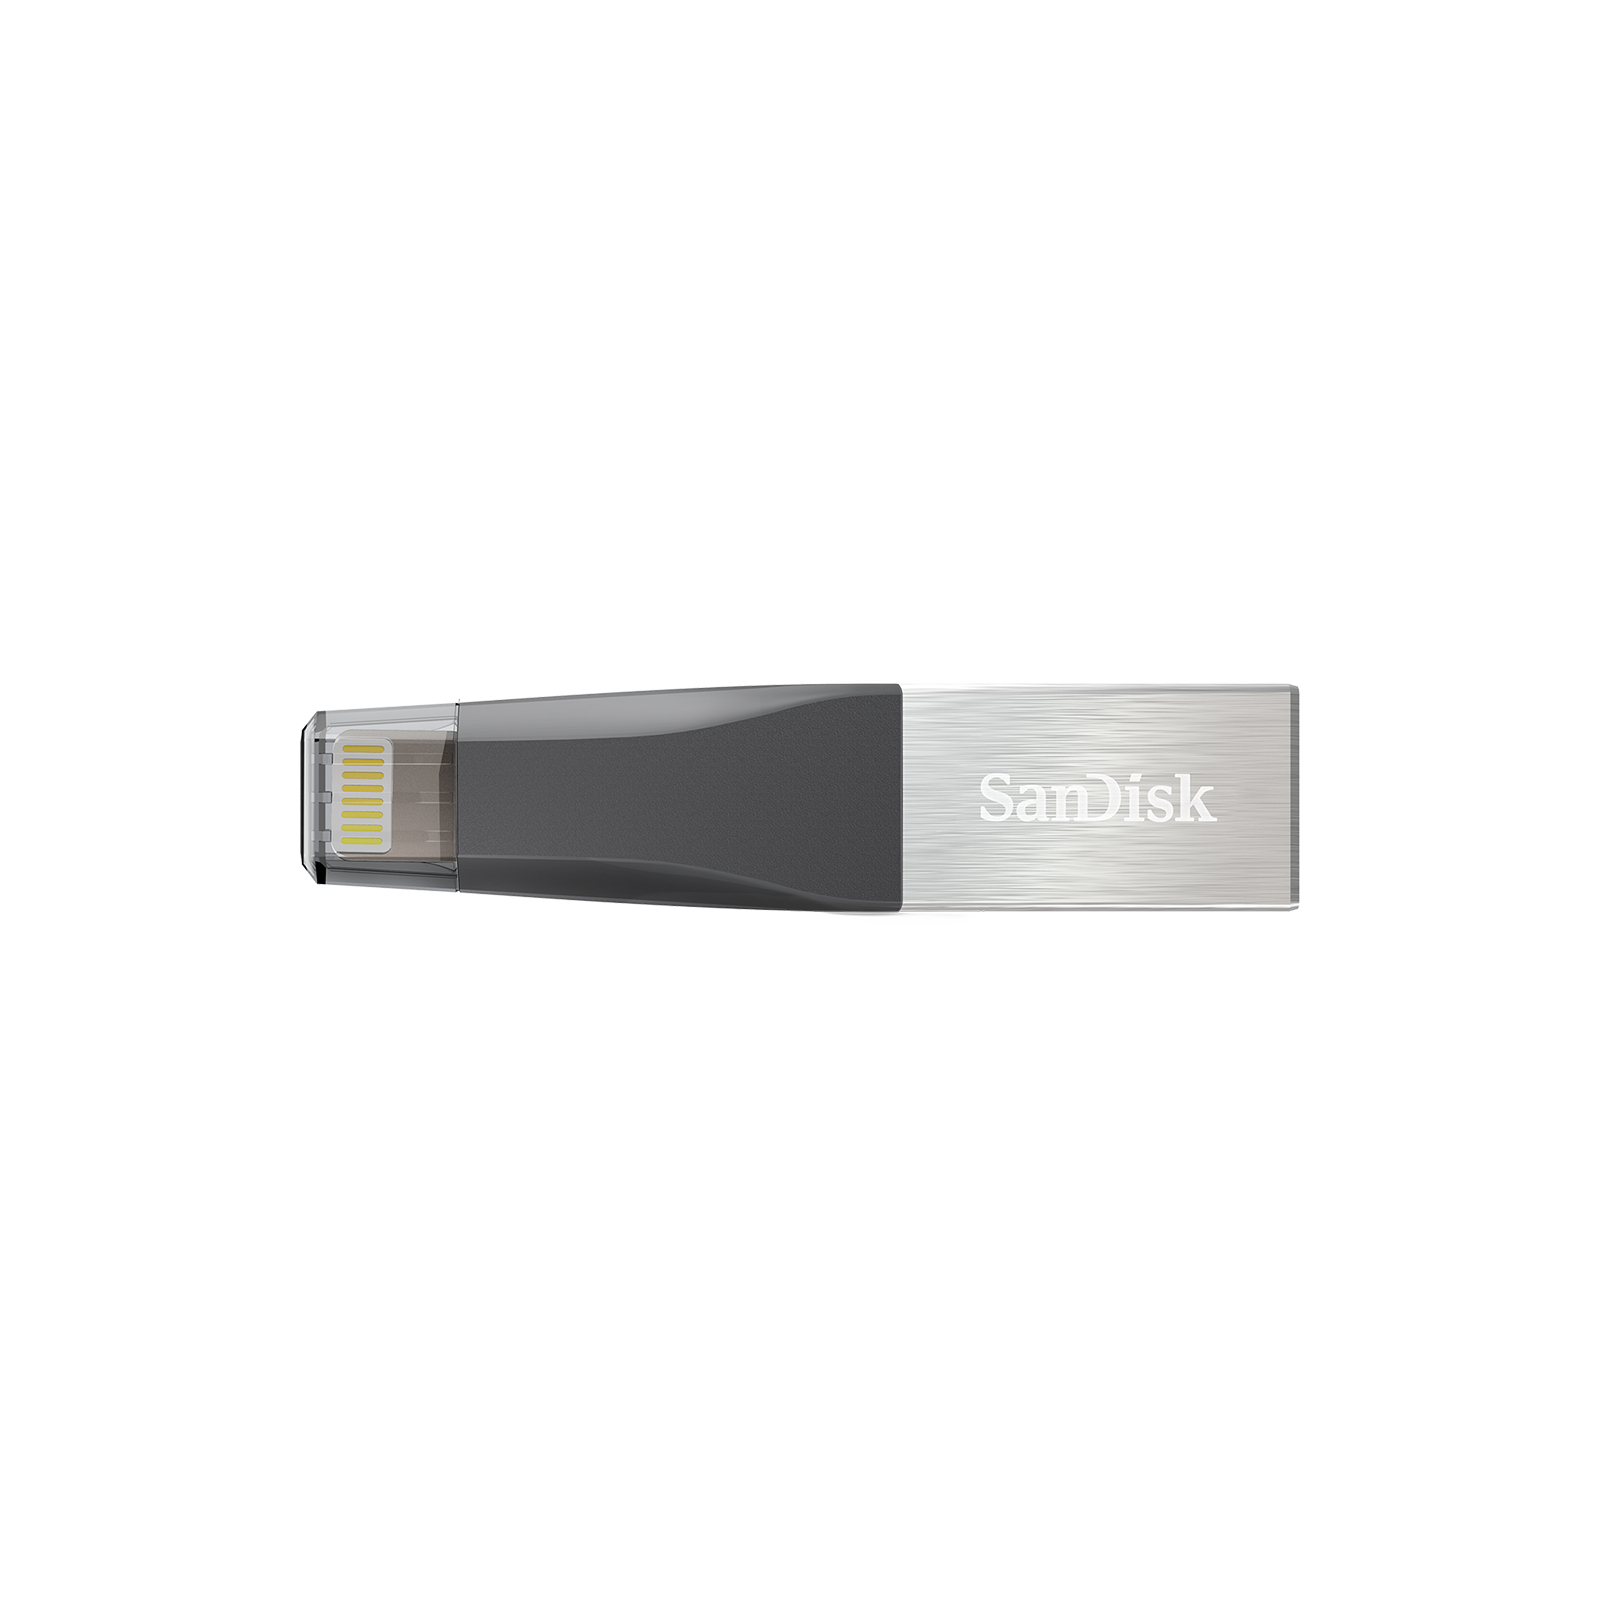 USB флеш накопитель SanDisk 32GB iXpand Mini USB 3.0/Lightning (SDIX40N-032G-GN6NN)